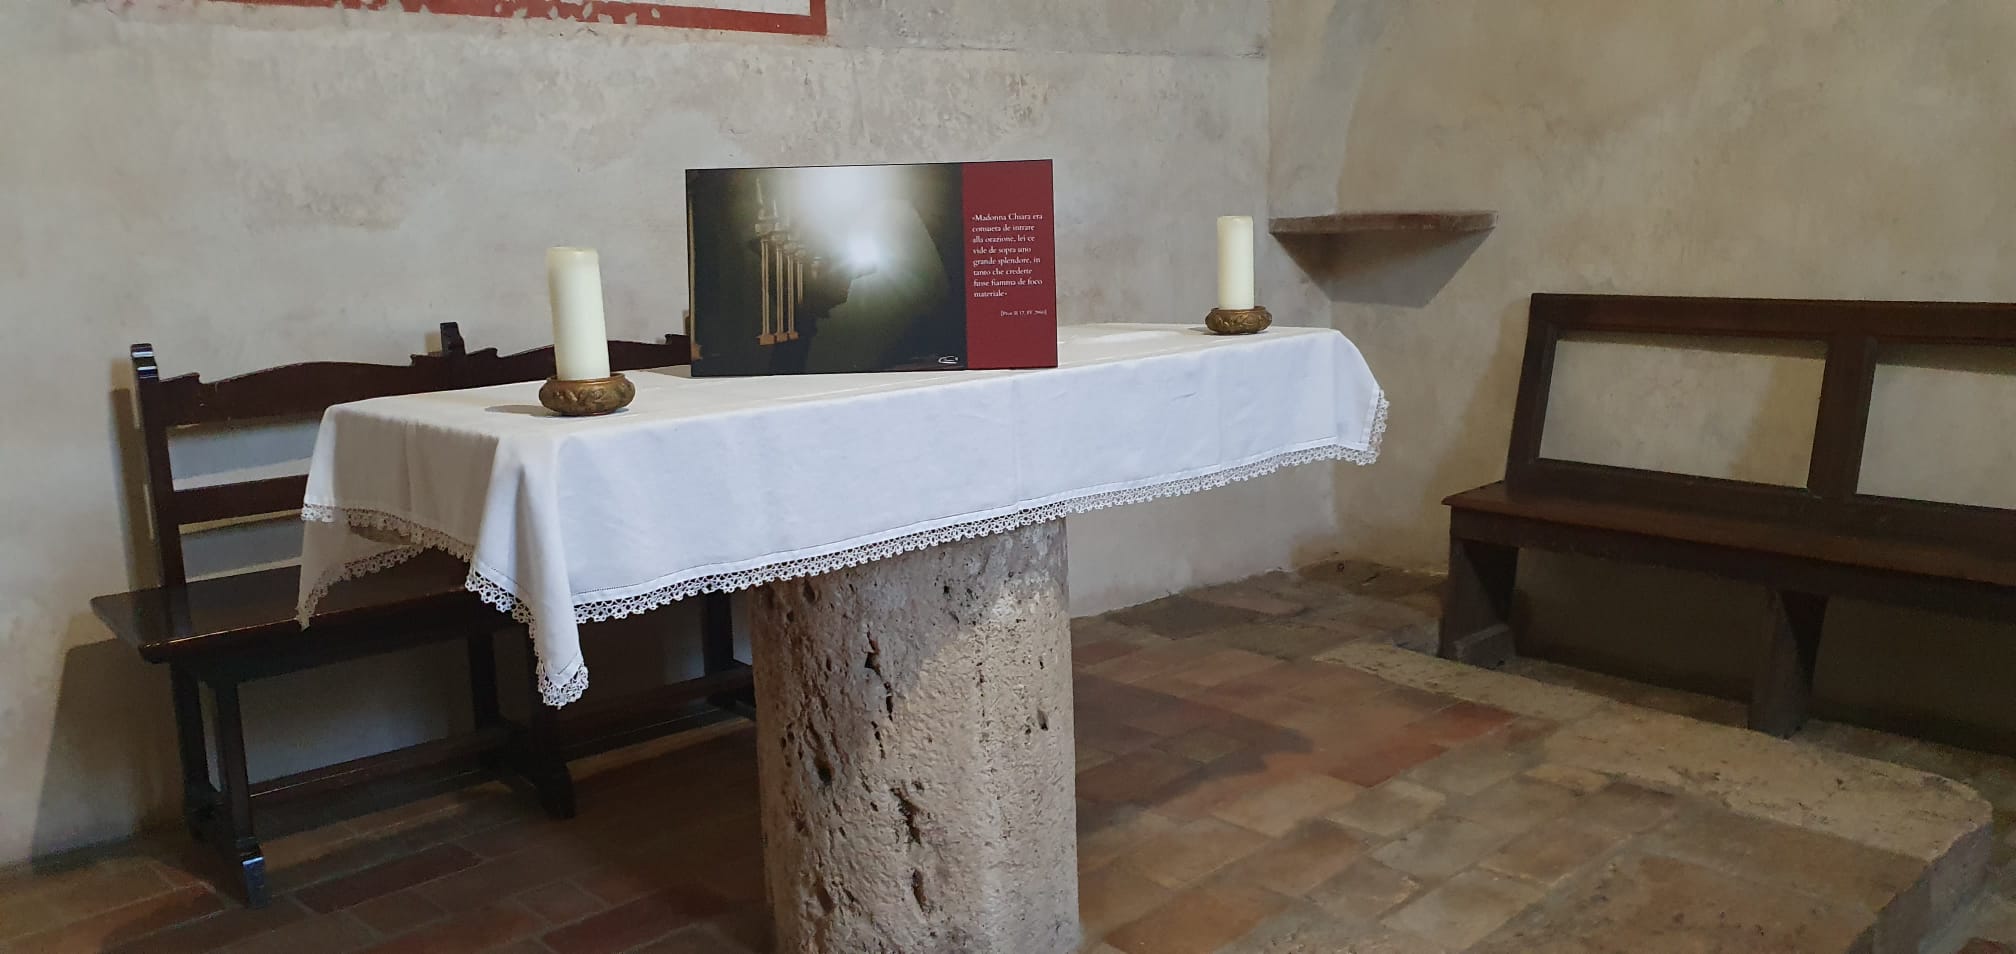 Festa del Voto Assisi - La mostra